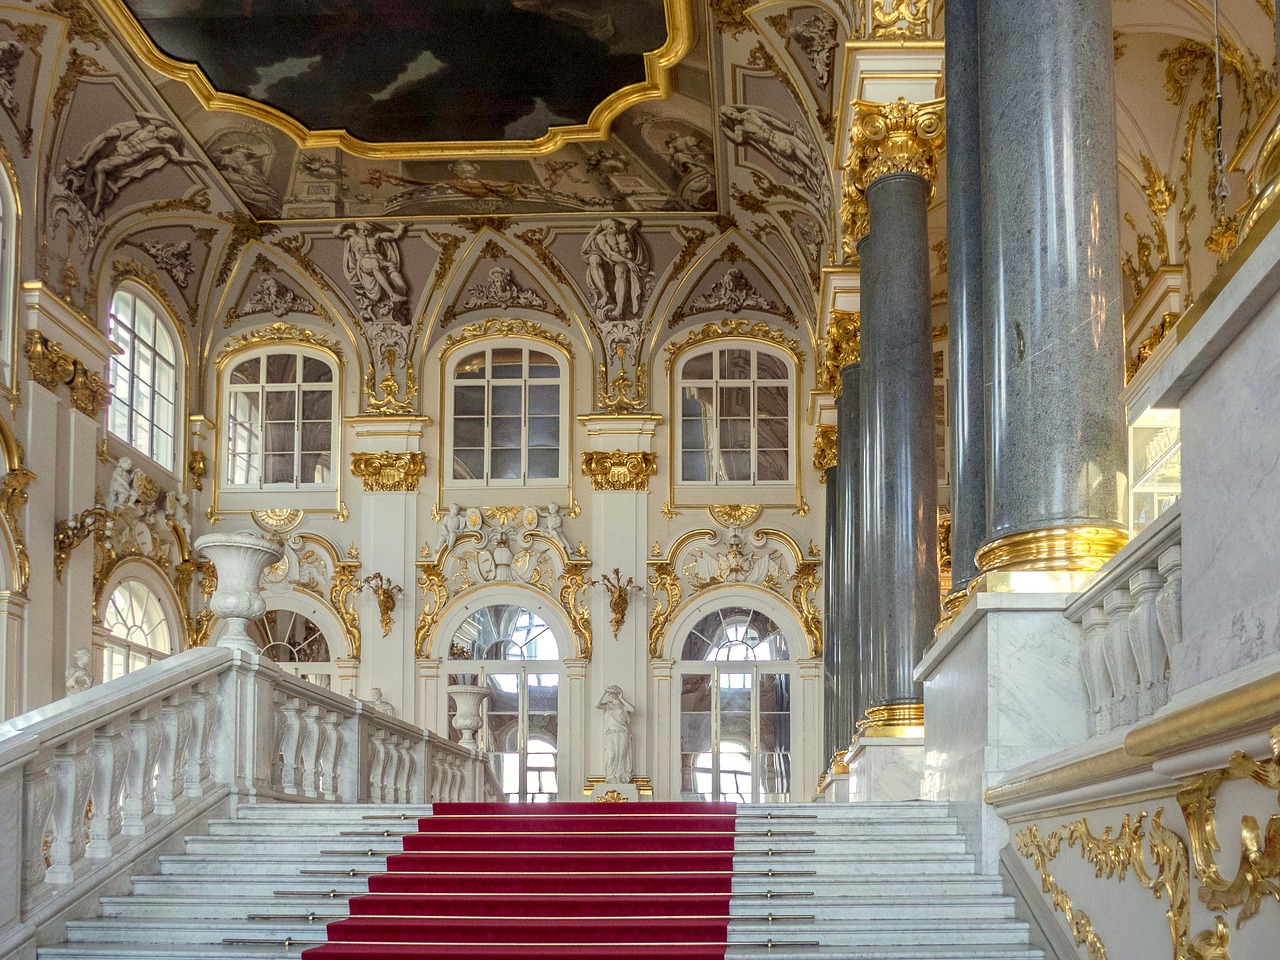 Inside Winter Palace